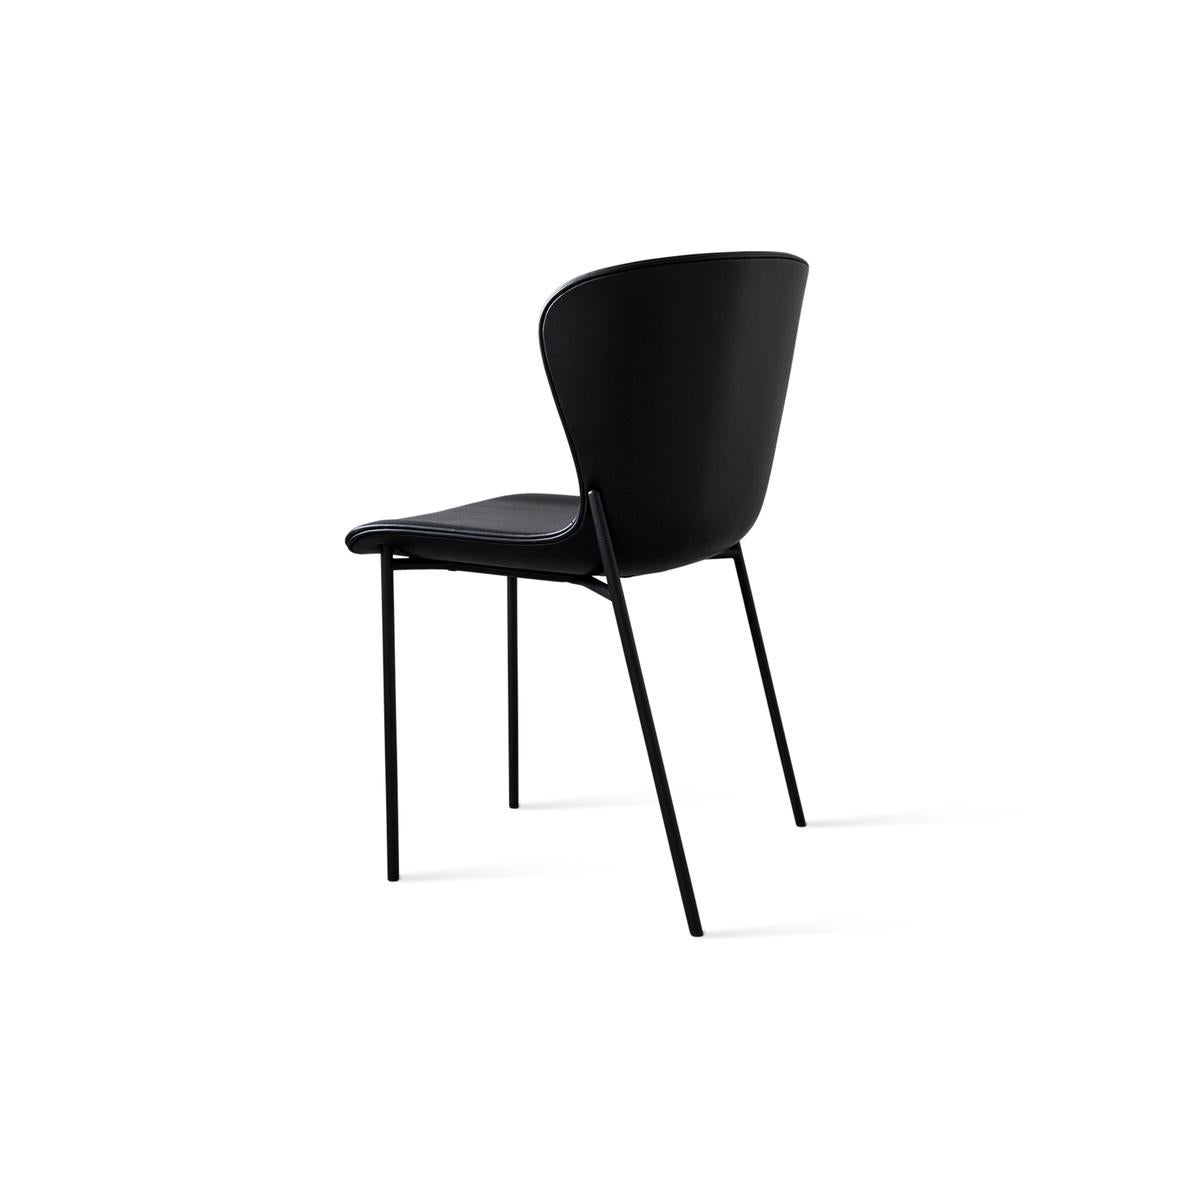 Pipe - chair 
Design: Friends & Founders
Model shown : 
Bolero CA-MO Black Leather
Legs: Black steel

Contemporary design studio Friends & Founders was founded in 2003 by Ida Linea and Rasmus Hilderbrand in Copenhagen, Denmark.
For this couple,